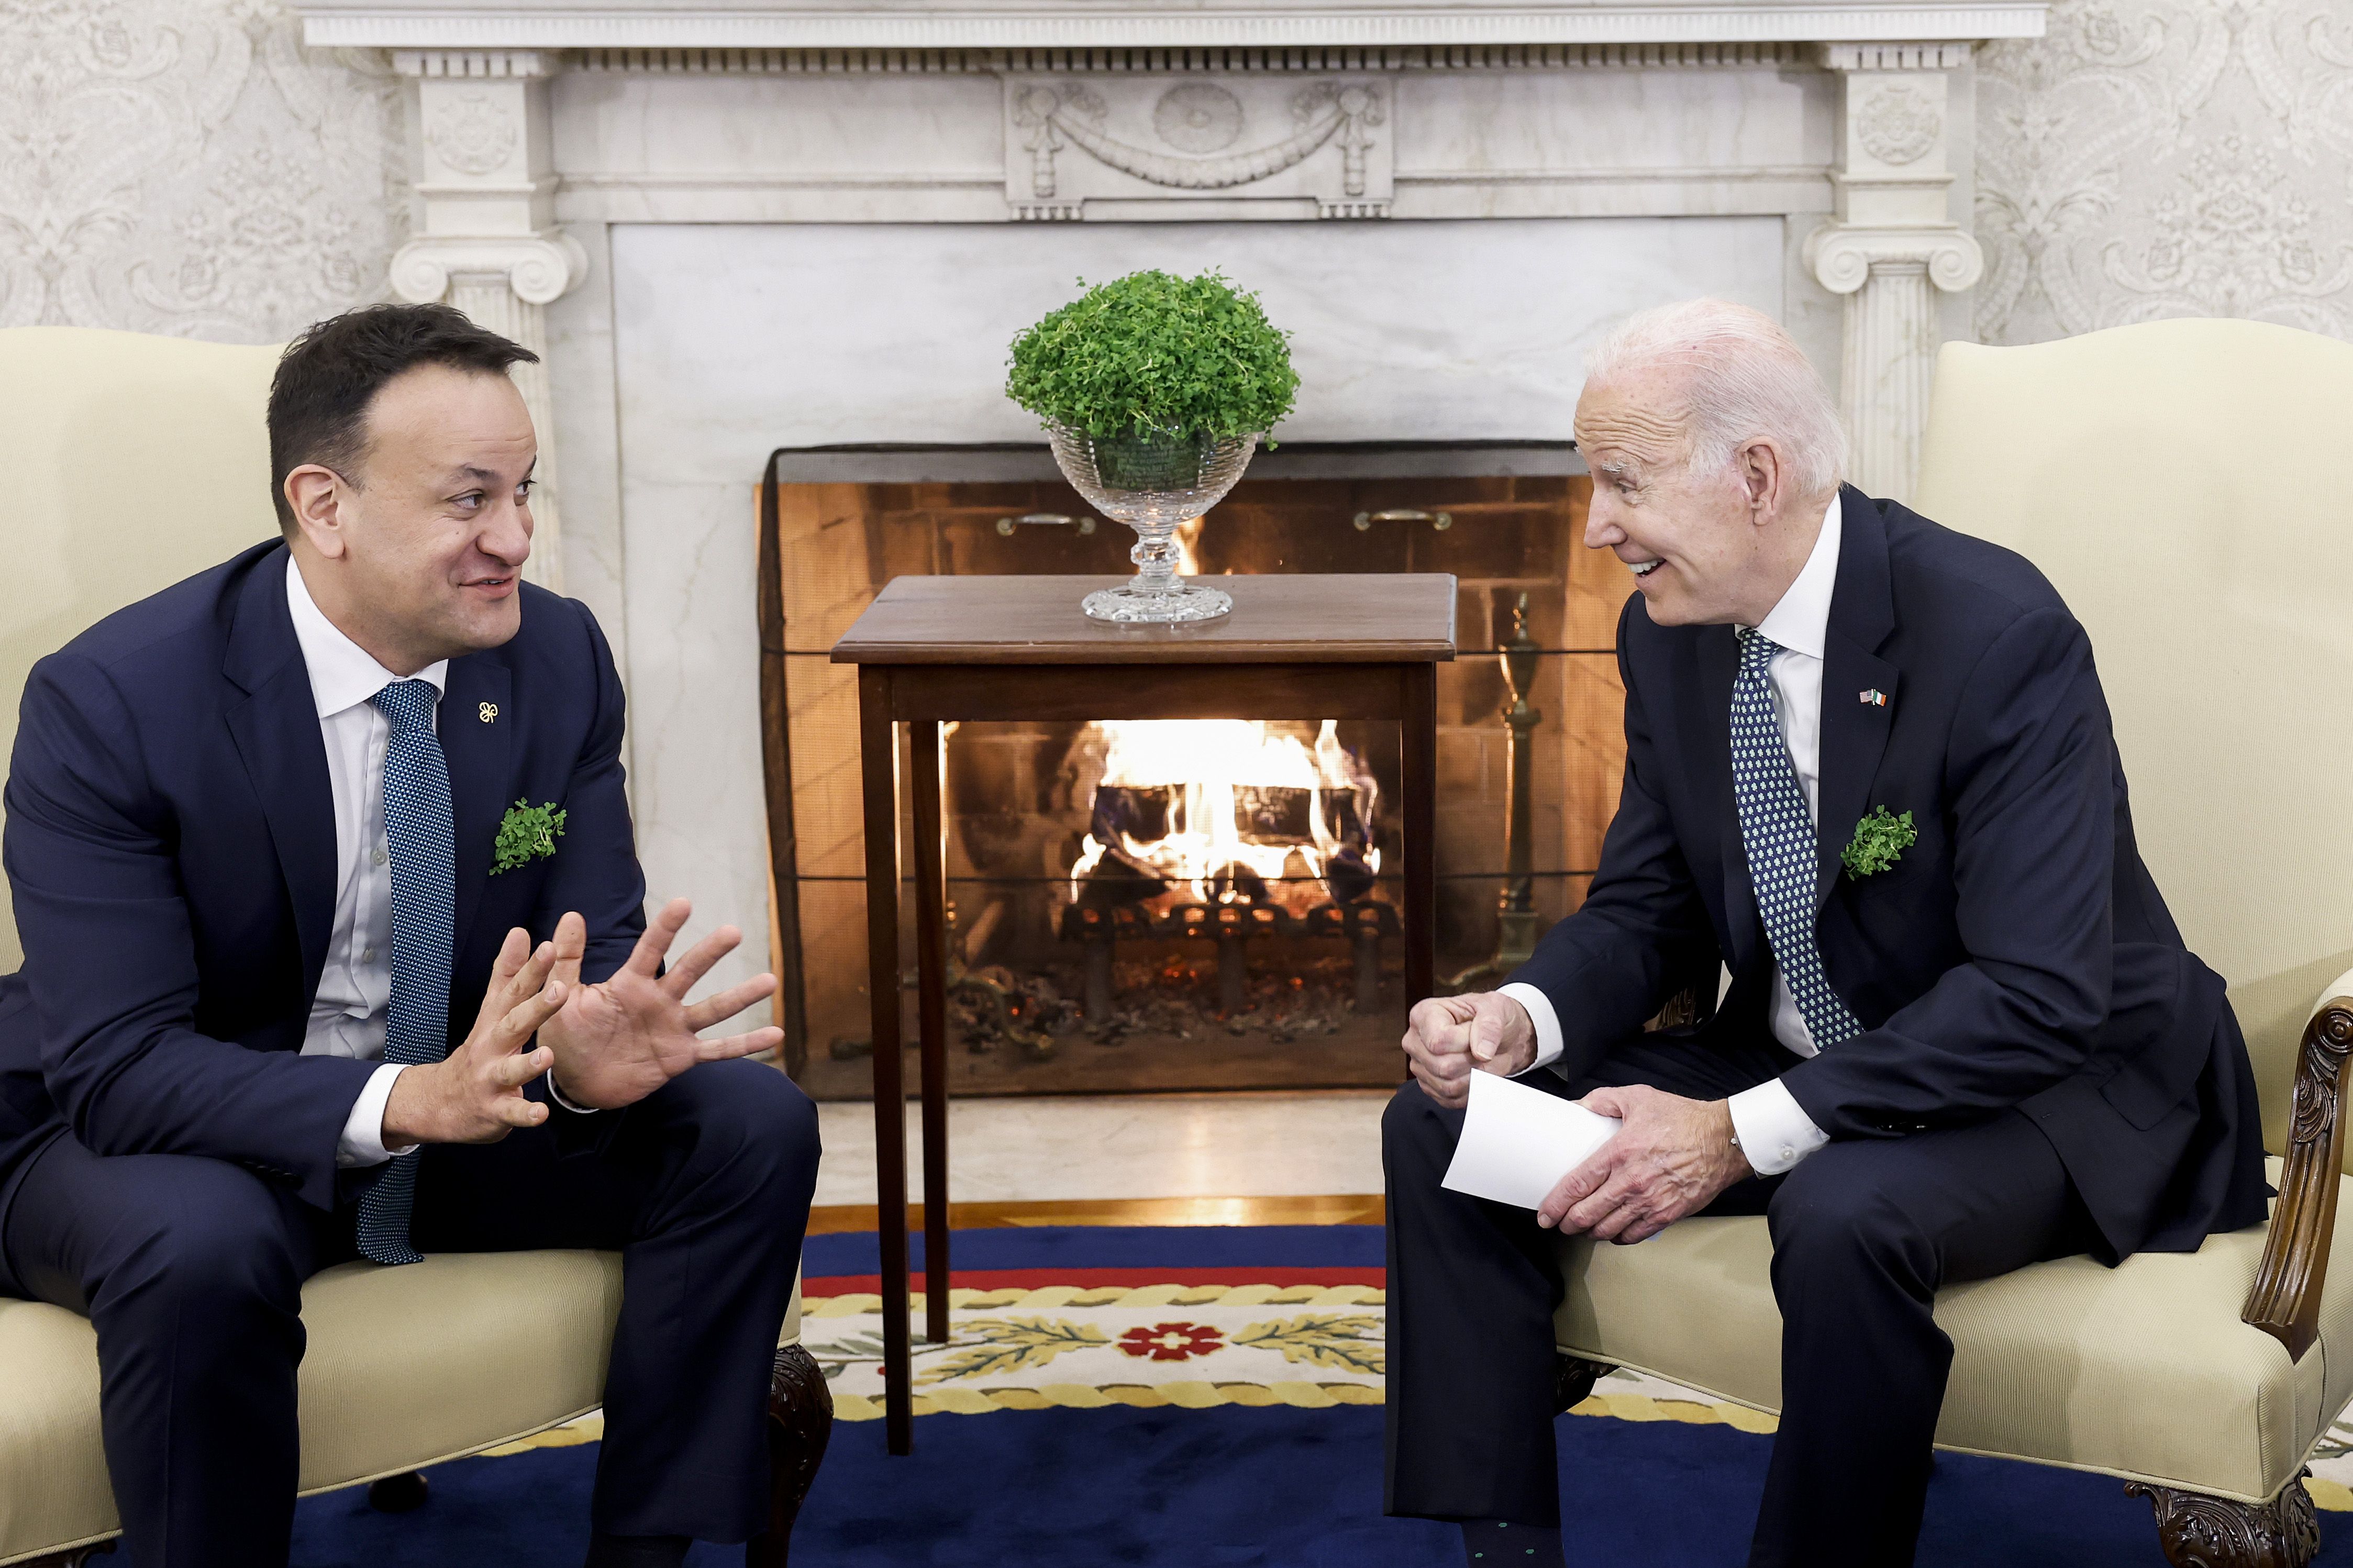 President Biden and Irish Taoiseach Leo Varadkar speak in the Oval Office on St. Patrick's Day.